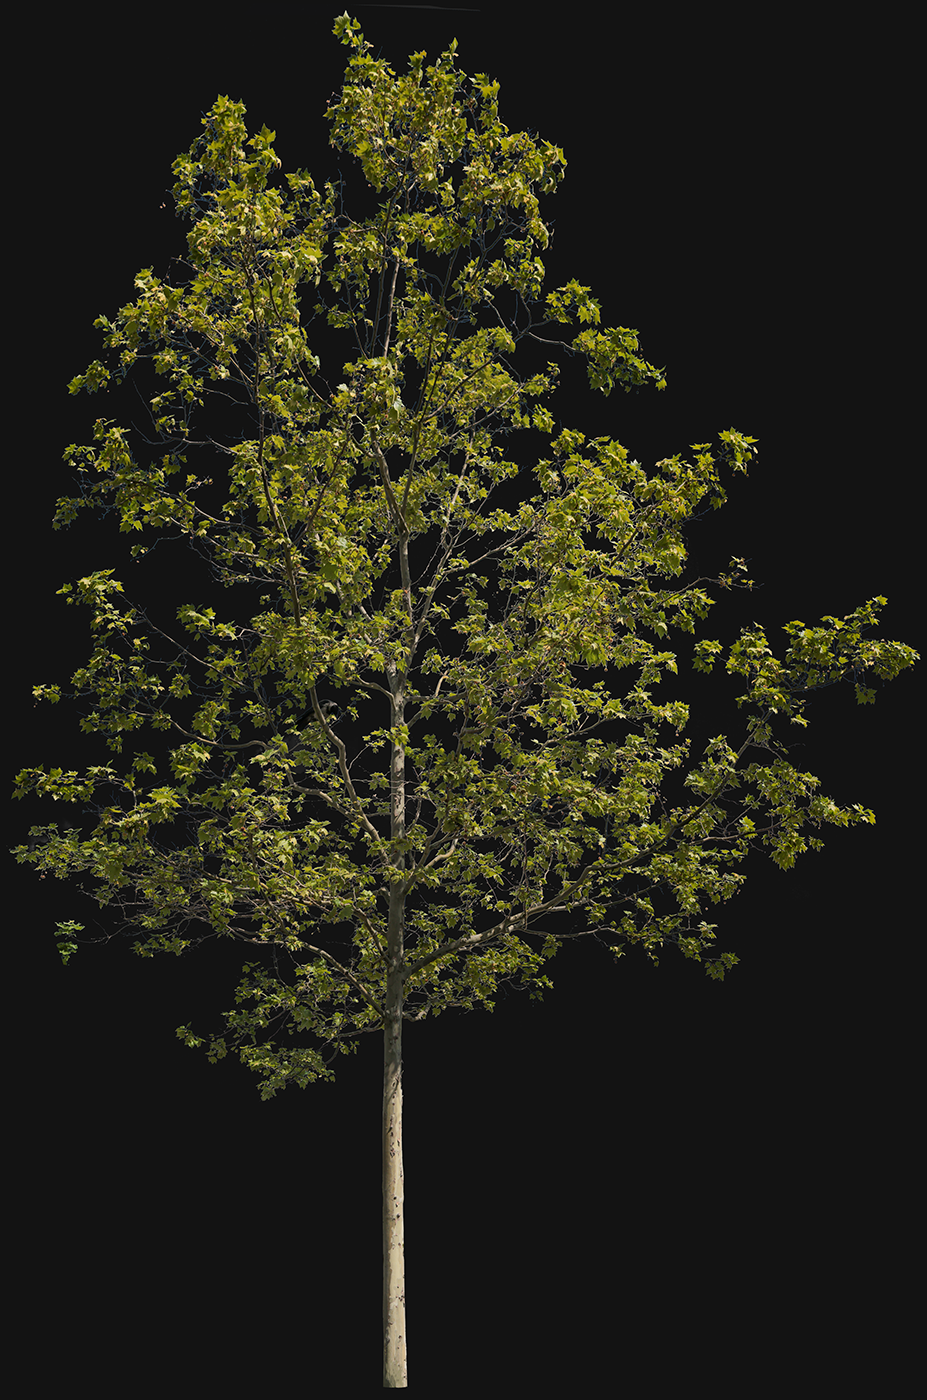 Platanus acerifolia m01 - cutout trees